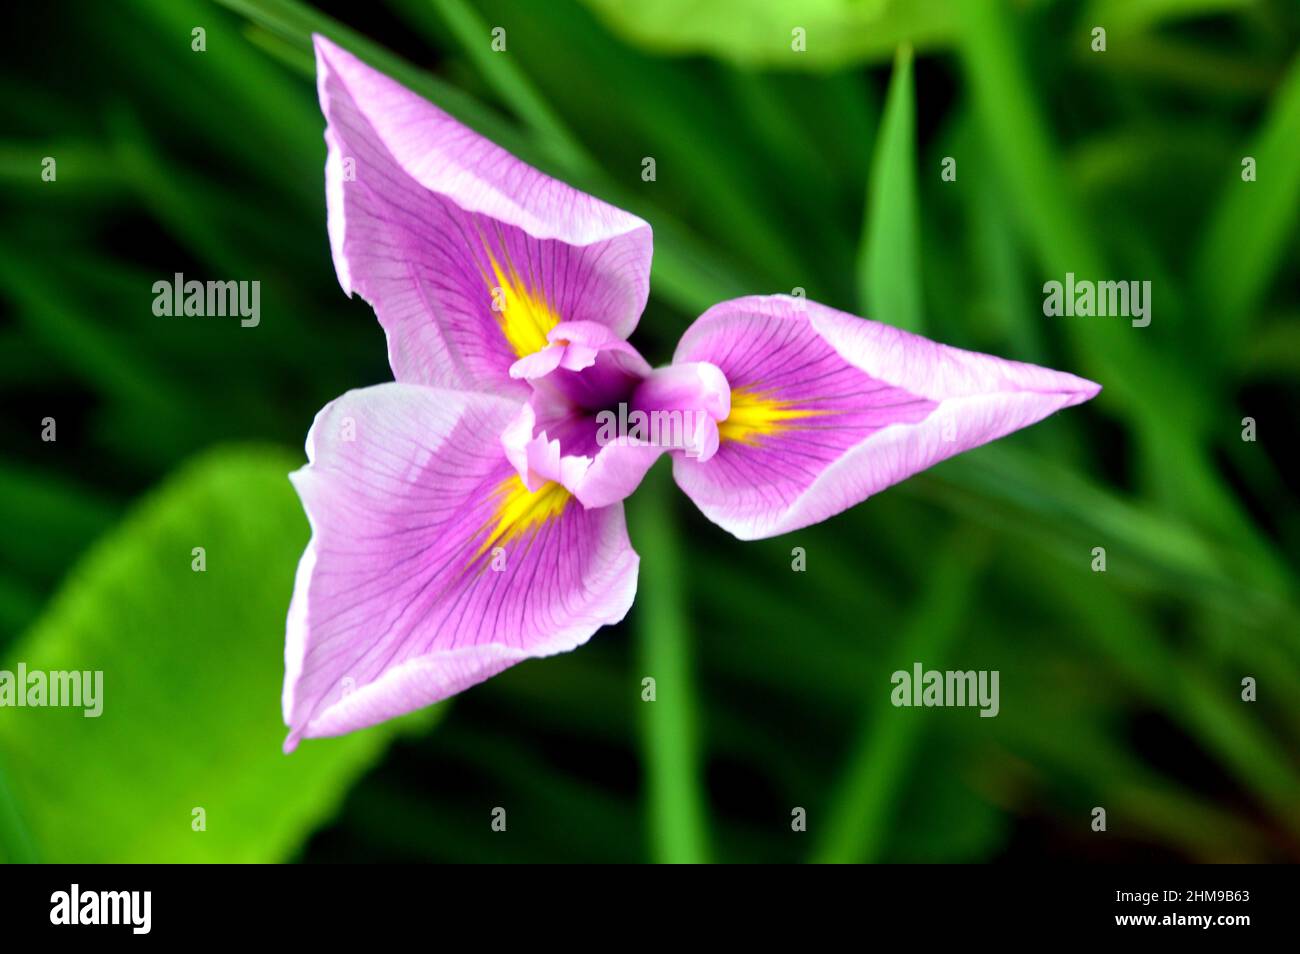 Planta de agua lila fotografías e imágenes de alta resolución - Alamy